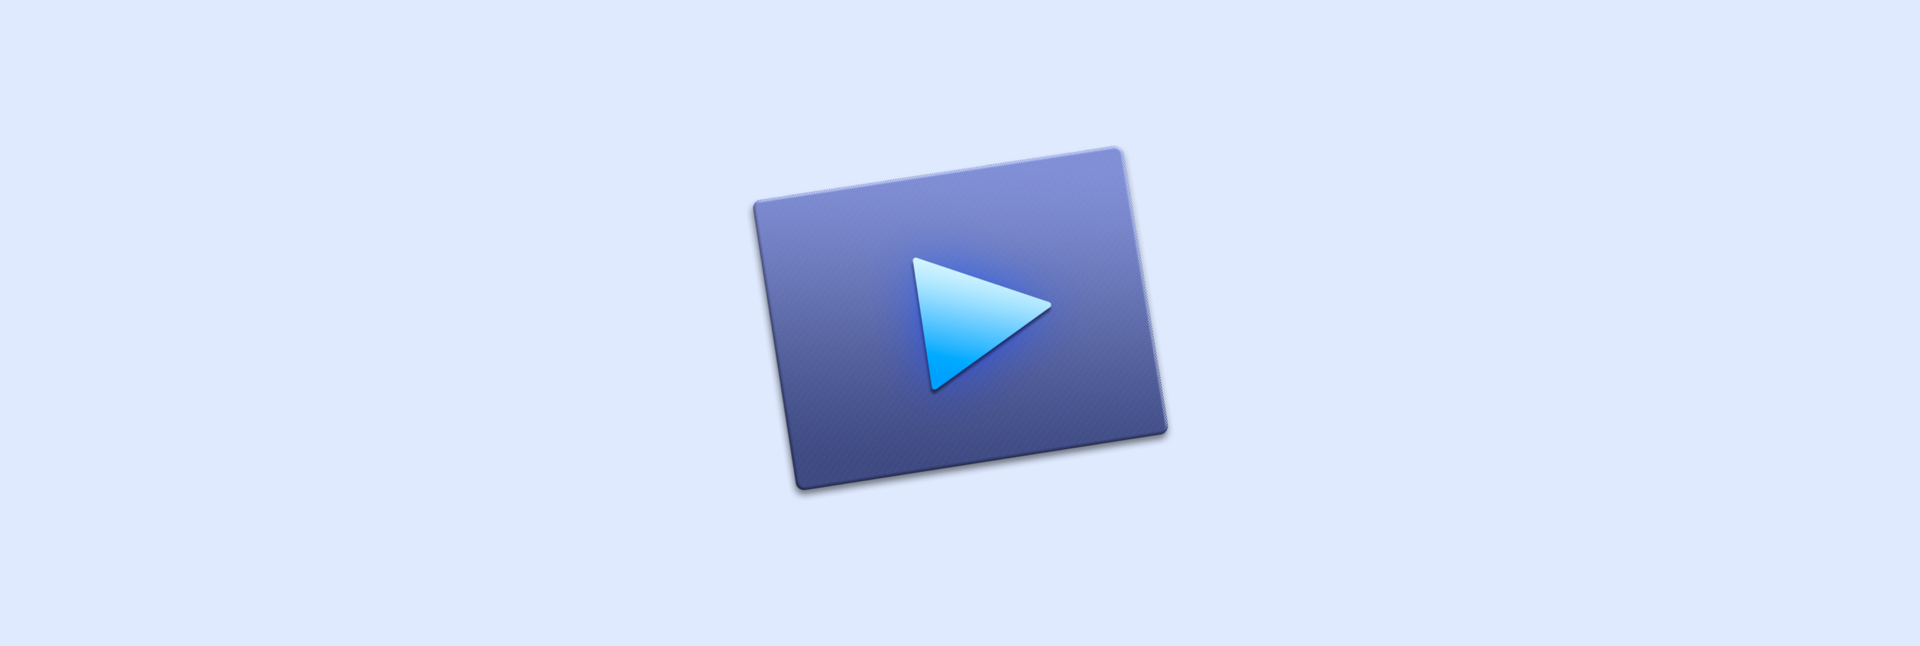 movist pro mac streaming